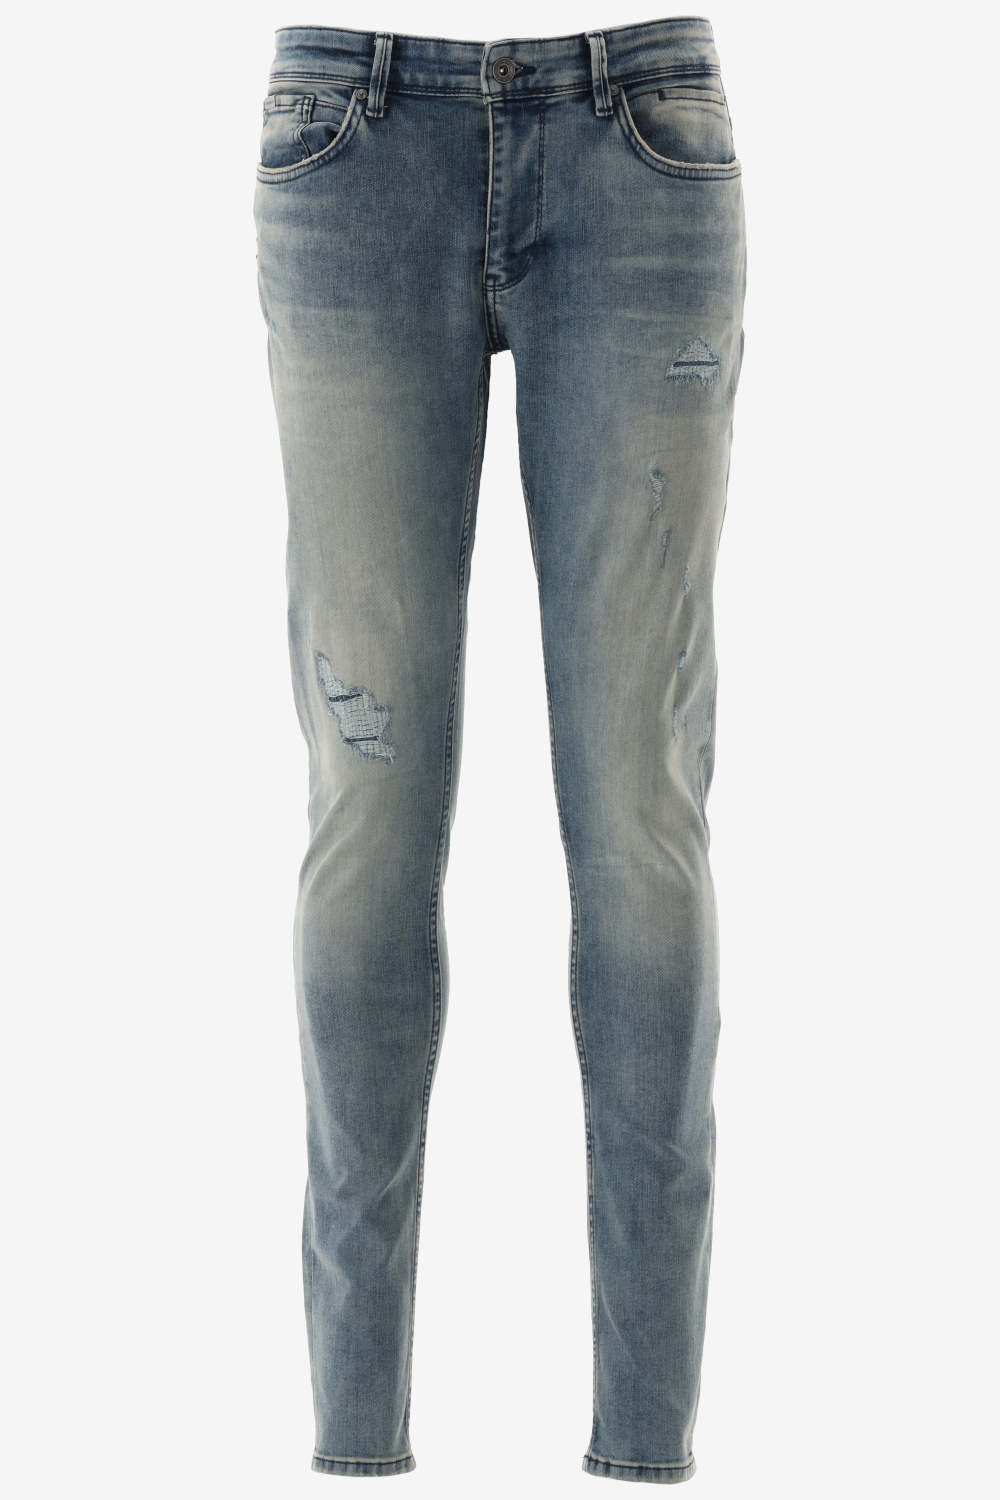 Purewhite - Jone Distressed Skinny Heren Skinny Fit Jeans - Blauw - Maat 30